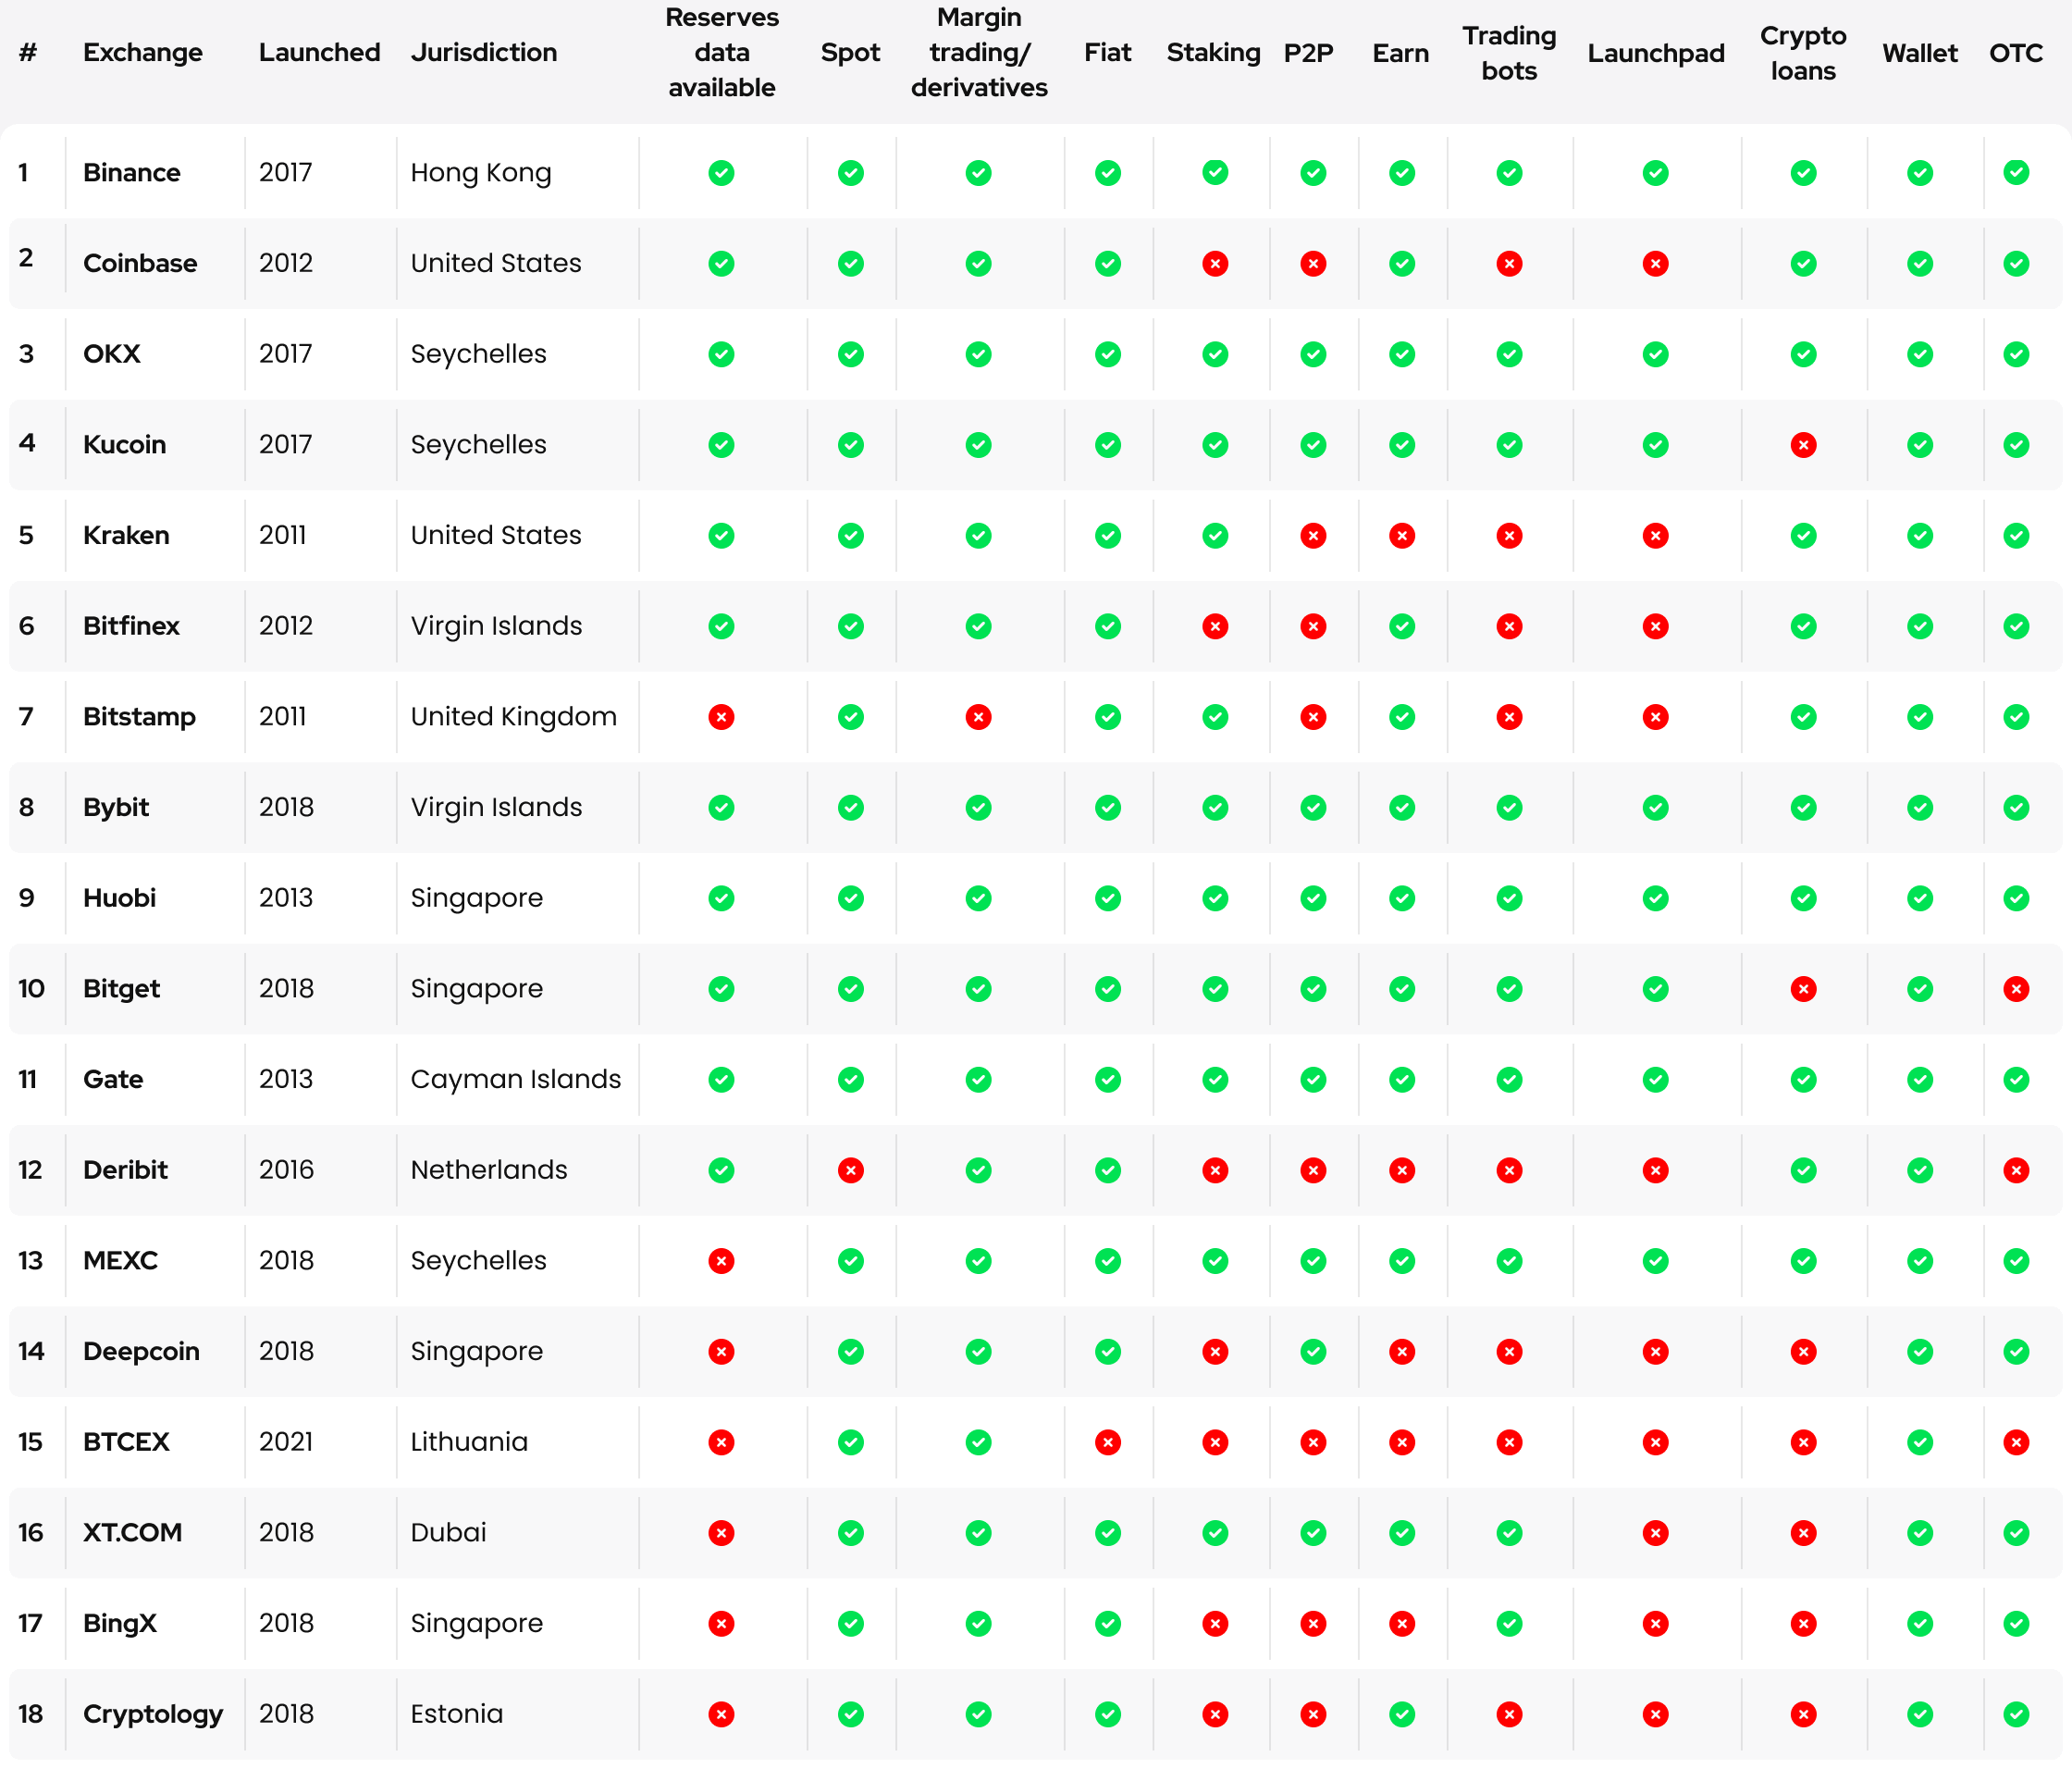 best cryptocurrency exchanges overview: Binance, Coinbase, OKX, Kucoin, Kraken, Bitfinex, Bitstamp, Bybit, Huobi, Bitget, Gate, Deribit, MEXC, Deepcoin, BTCEX, XT.COM, BingX, Cryptology